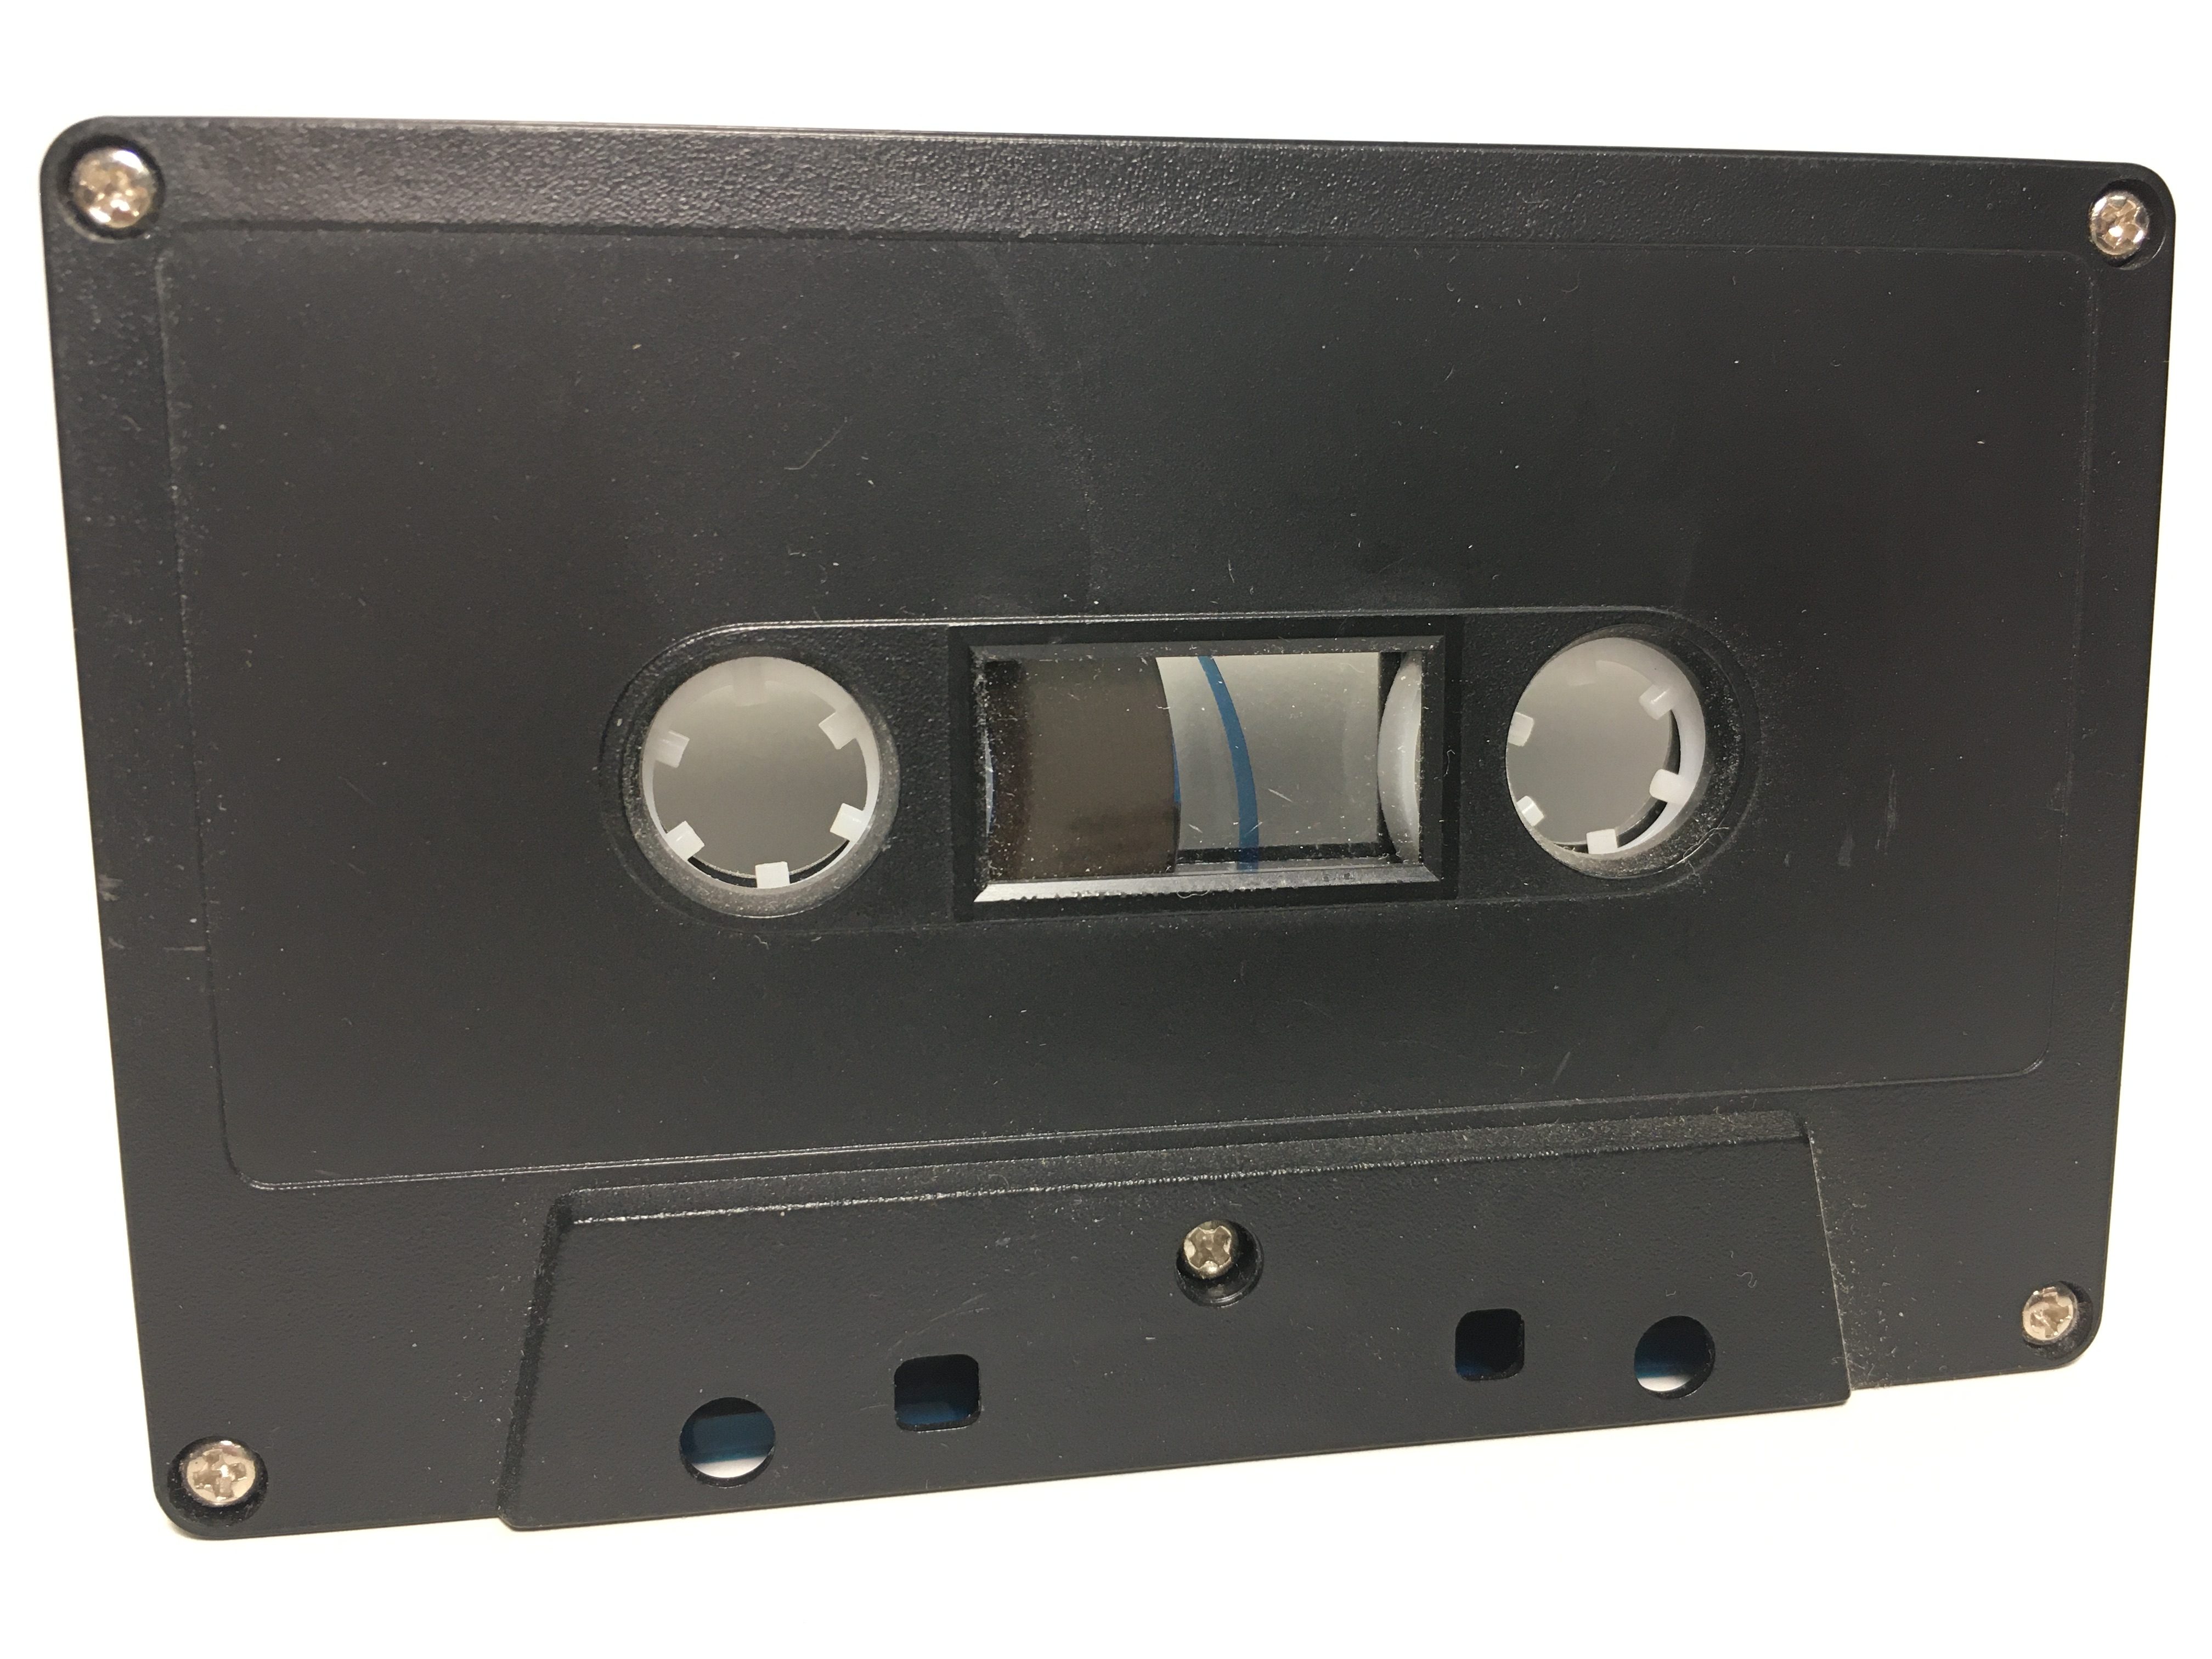 C-40 High Bias Black Cassettes 25 pack